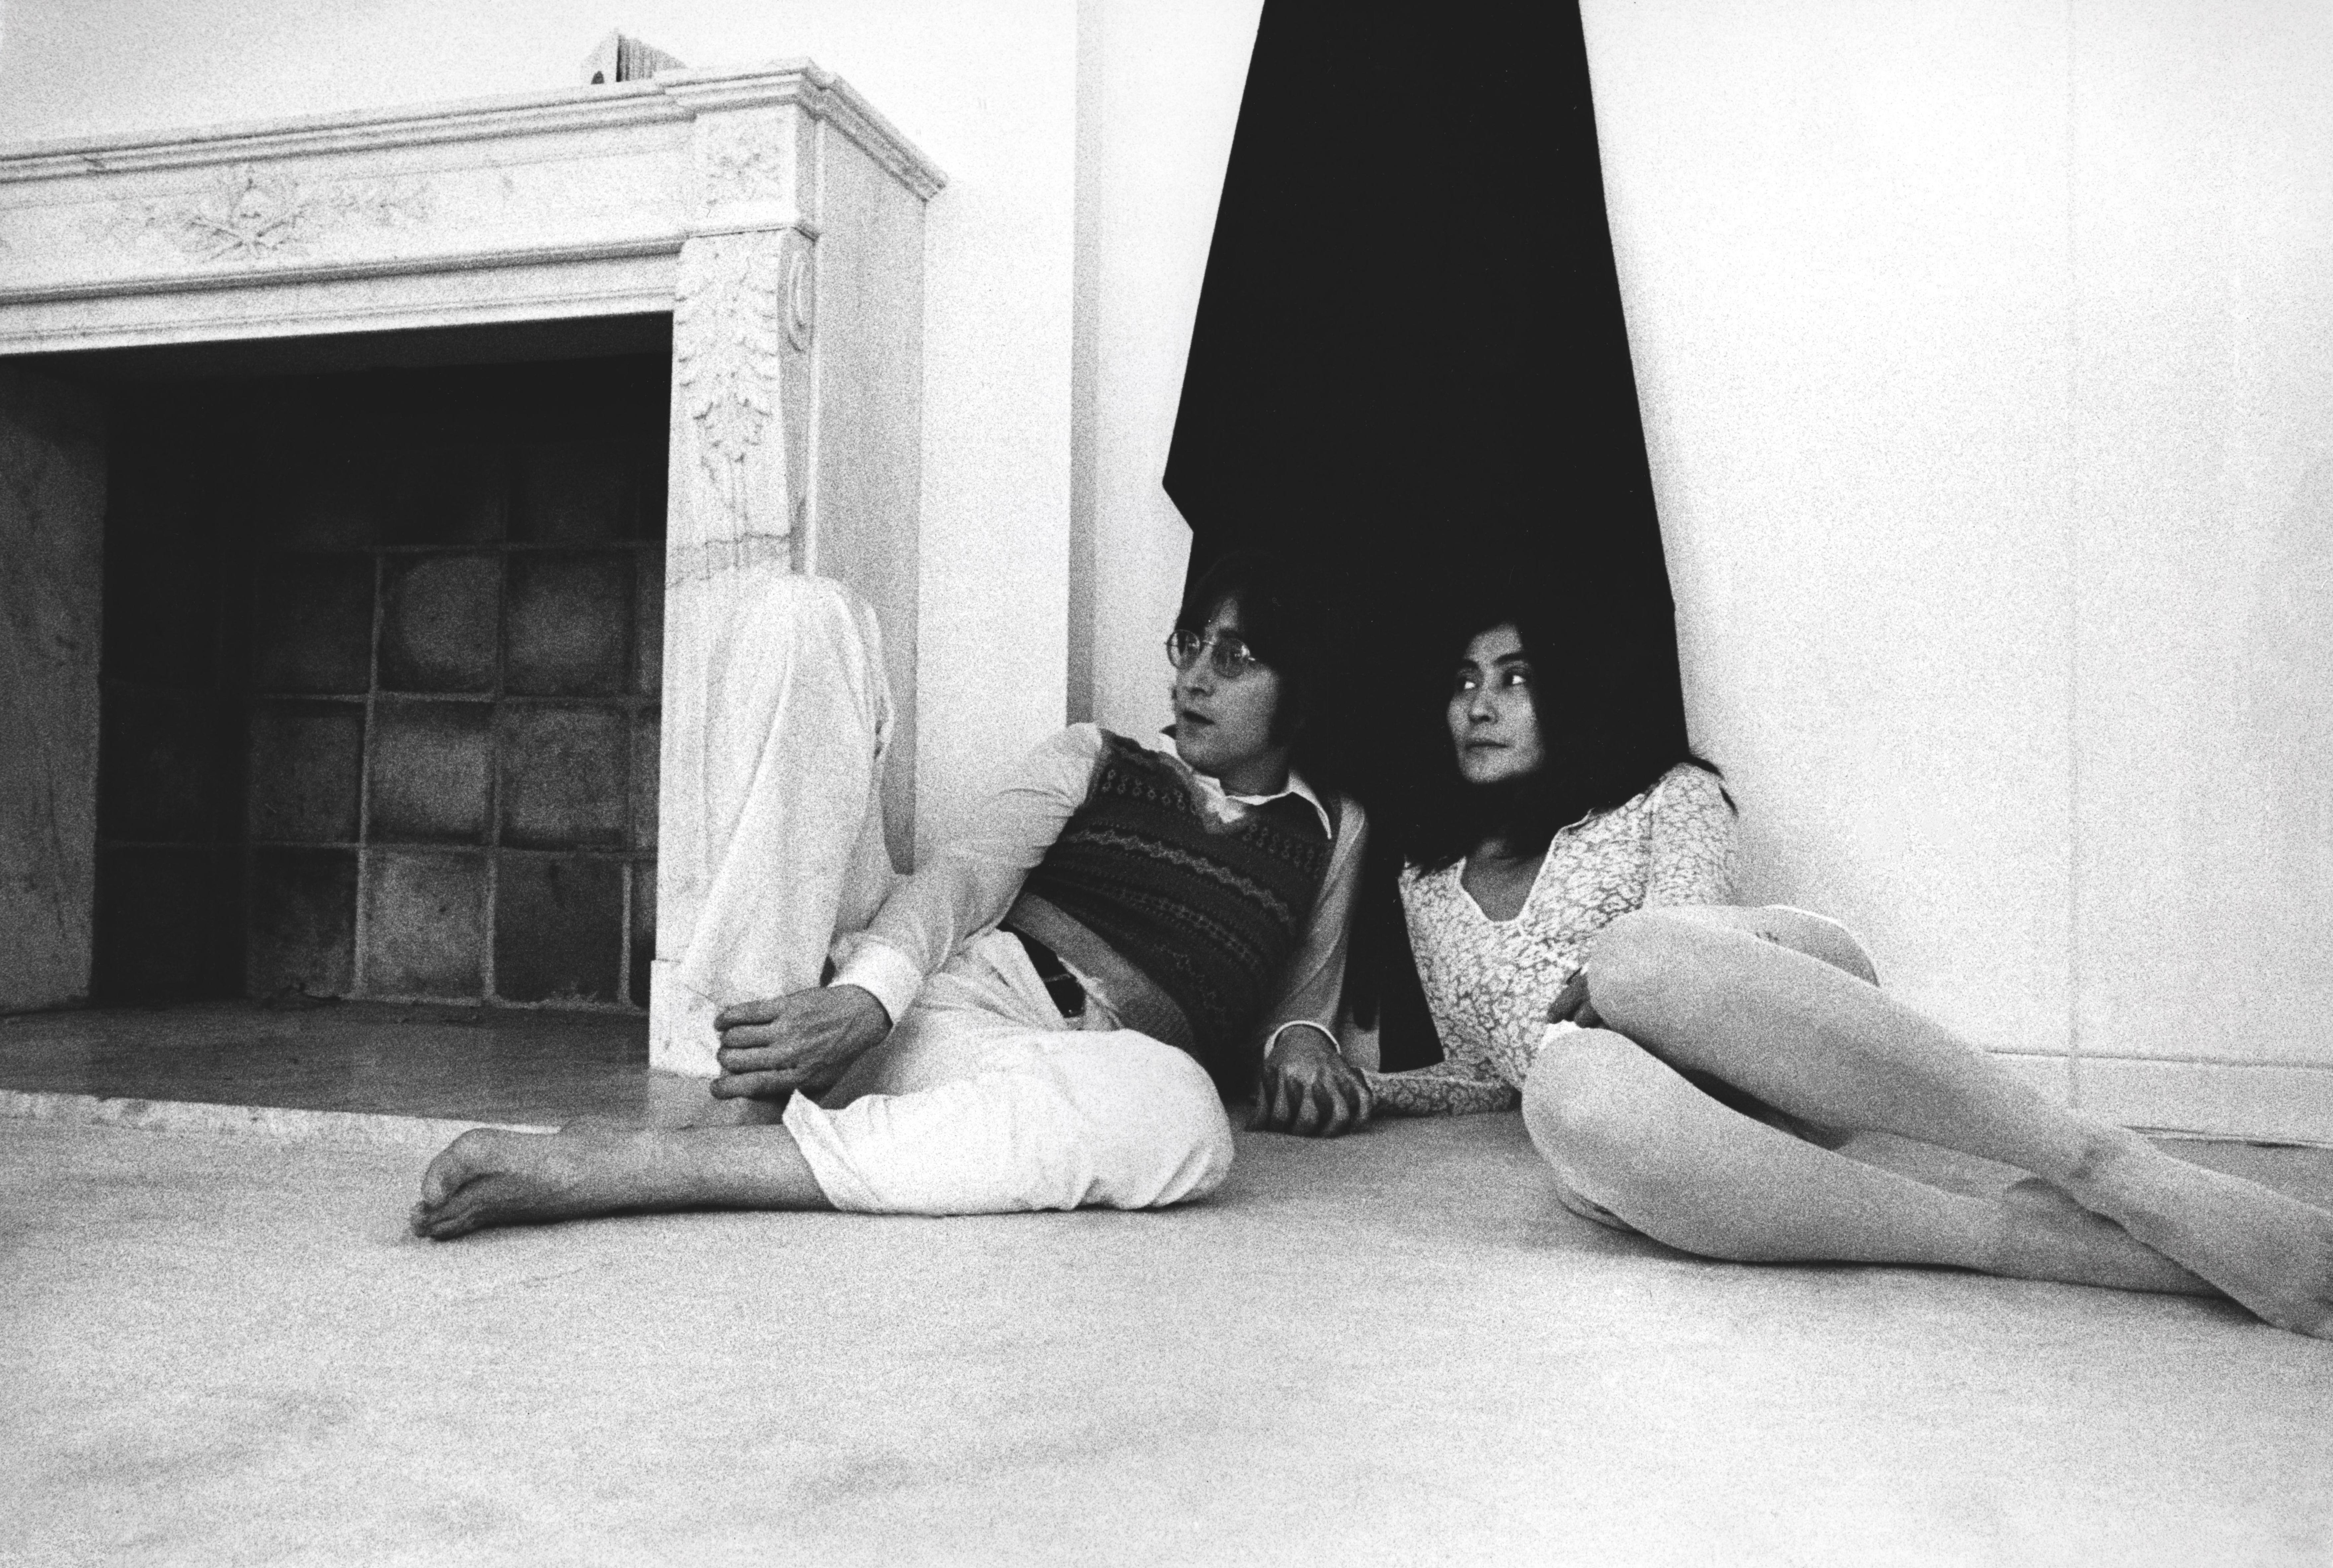 Unknown Portrait Photograph - John Lennon and Yoko Ono: Hanging Out Globe Photos Fine Art Print